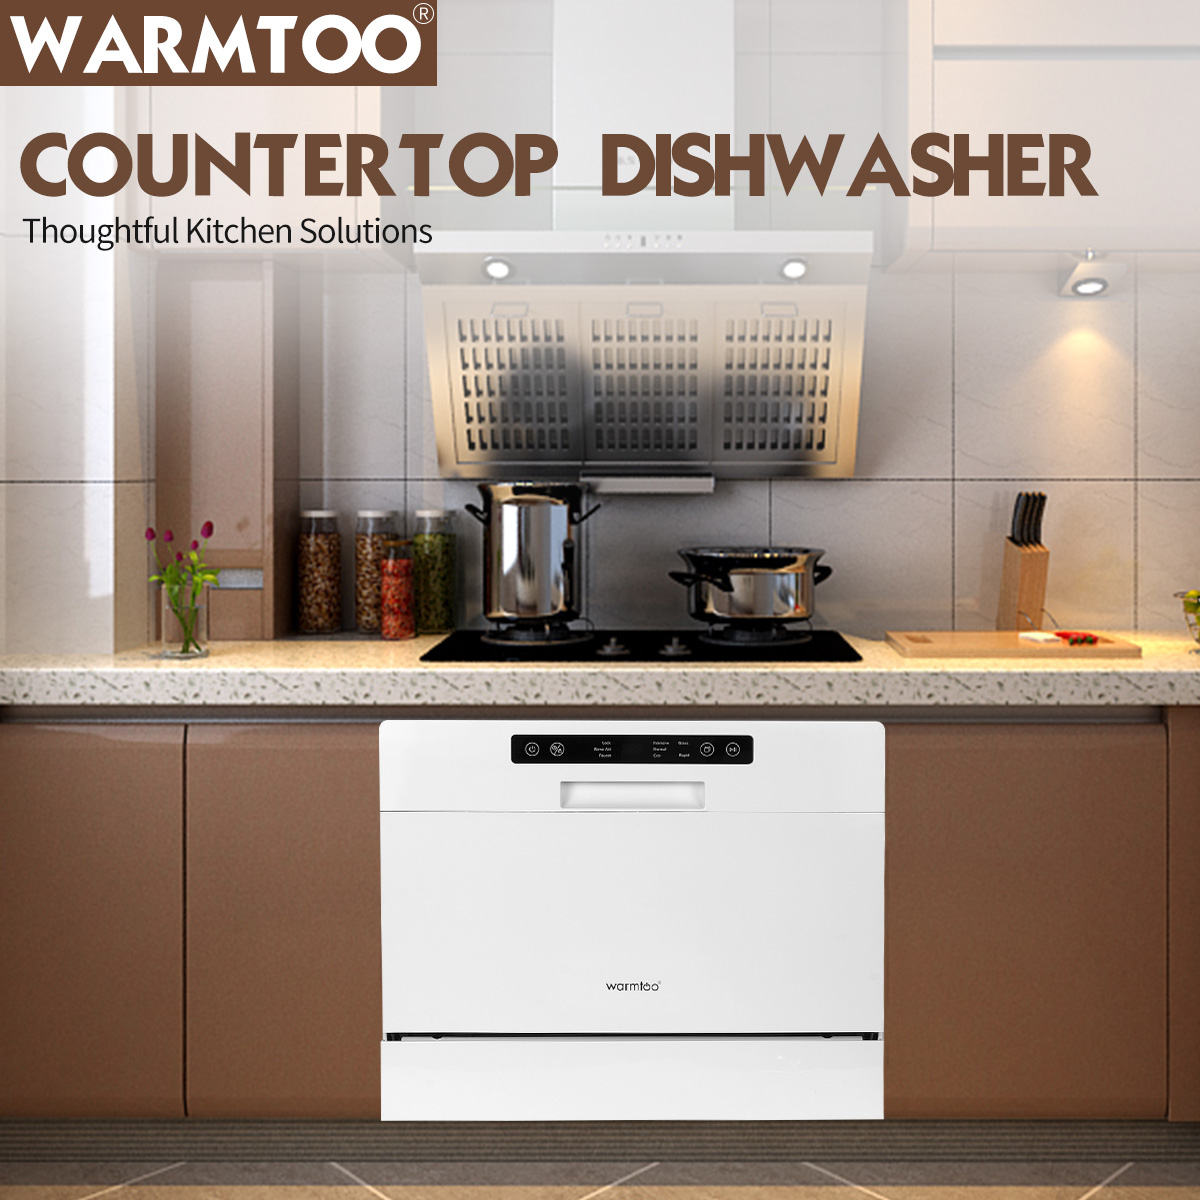 Warmto-6-Piece-Countertop-Dishwasher-Counter-Top-Dishwasher-Machine-Delay-Start-LED-Display-5-Washin-1931541-1